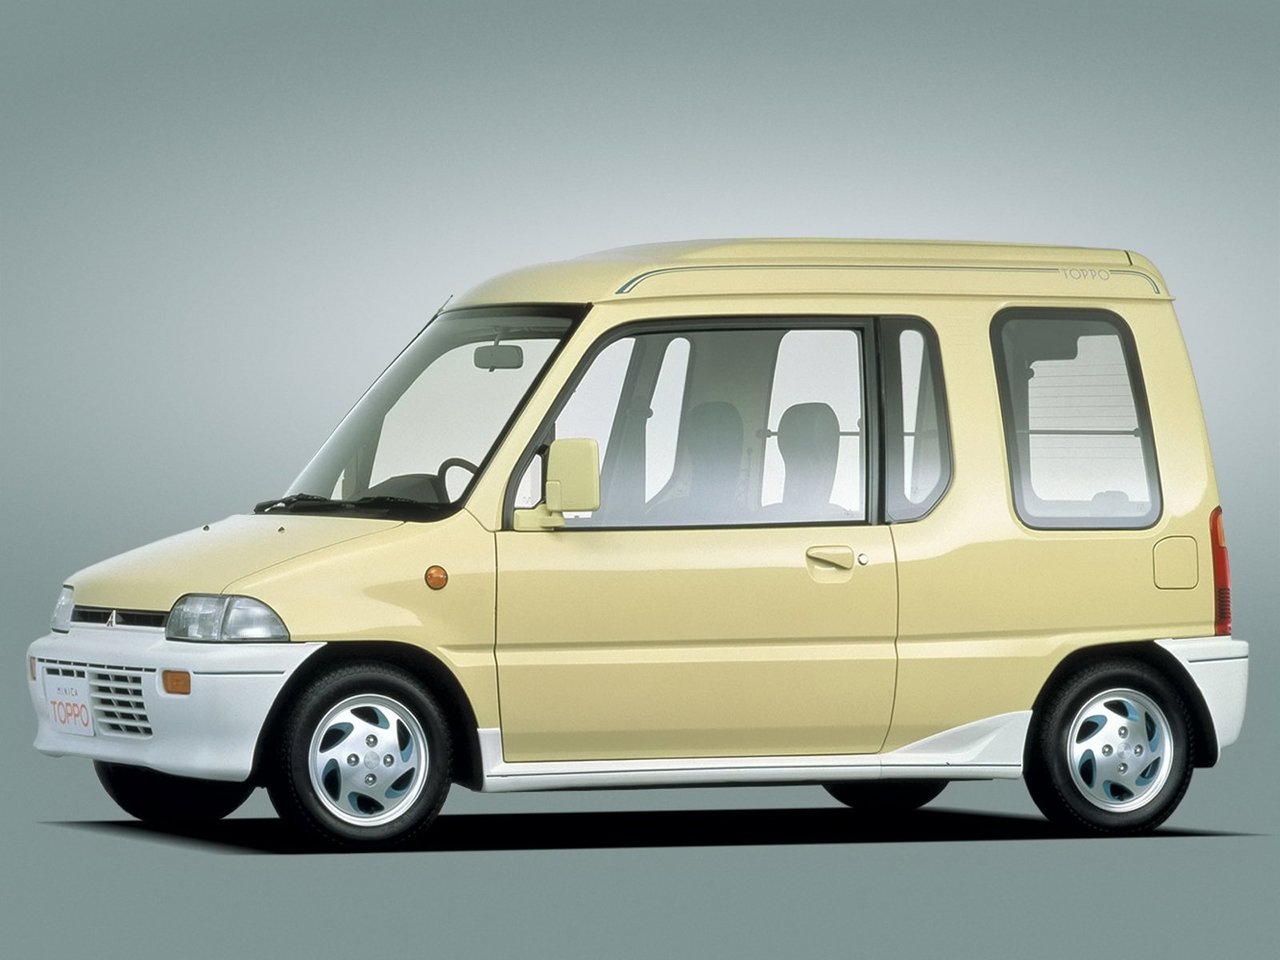 Расход газа одной комплектации хэтчбека три двери Mitsubishi Toppo. Разница стоимости заправки газом и бензином. Автономный пробег до и после установки ГБО.